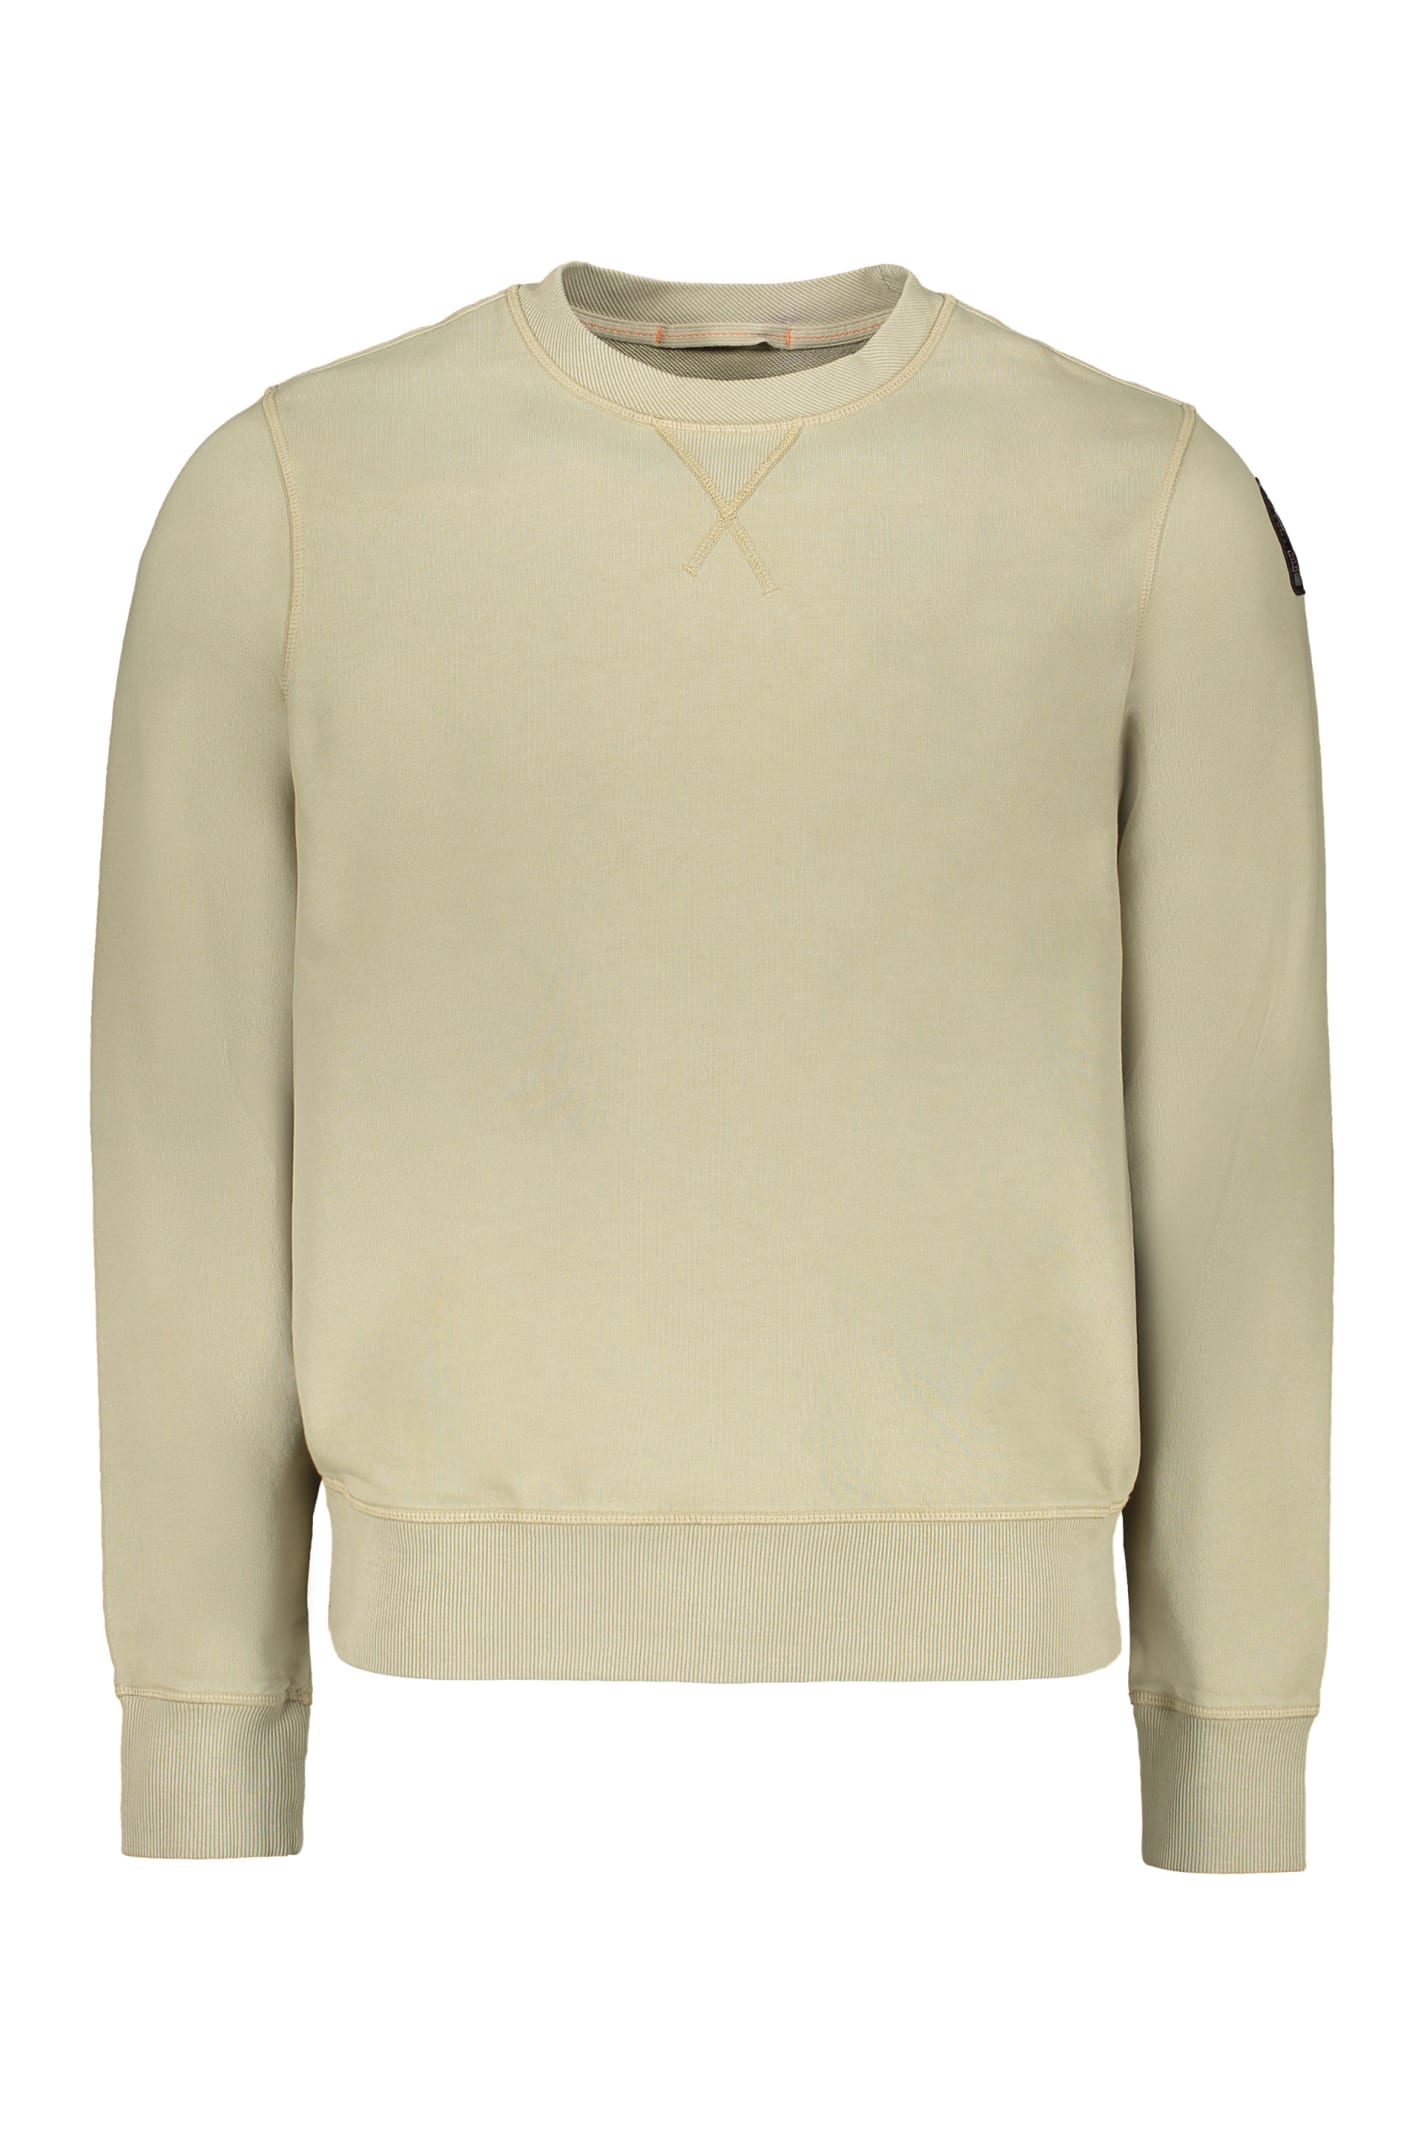 Caler Basic Long Sleeve Sweatshirt